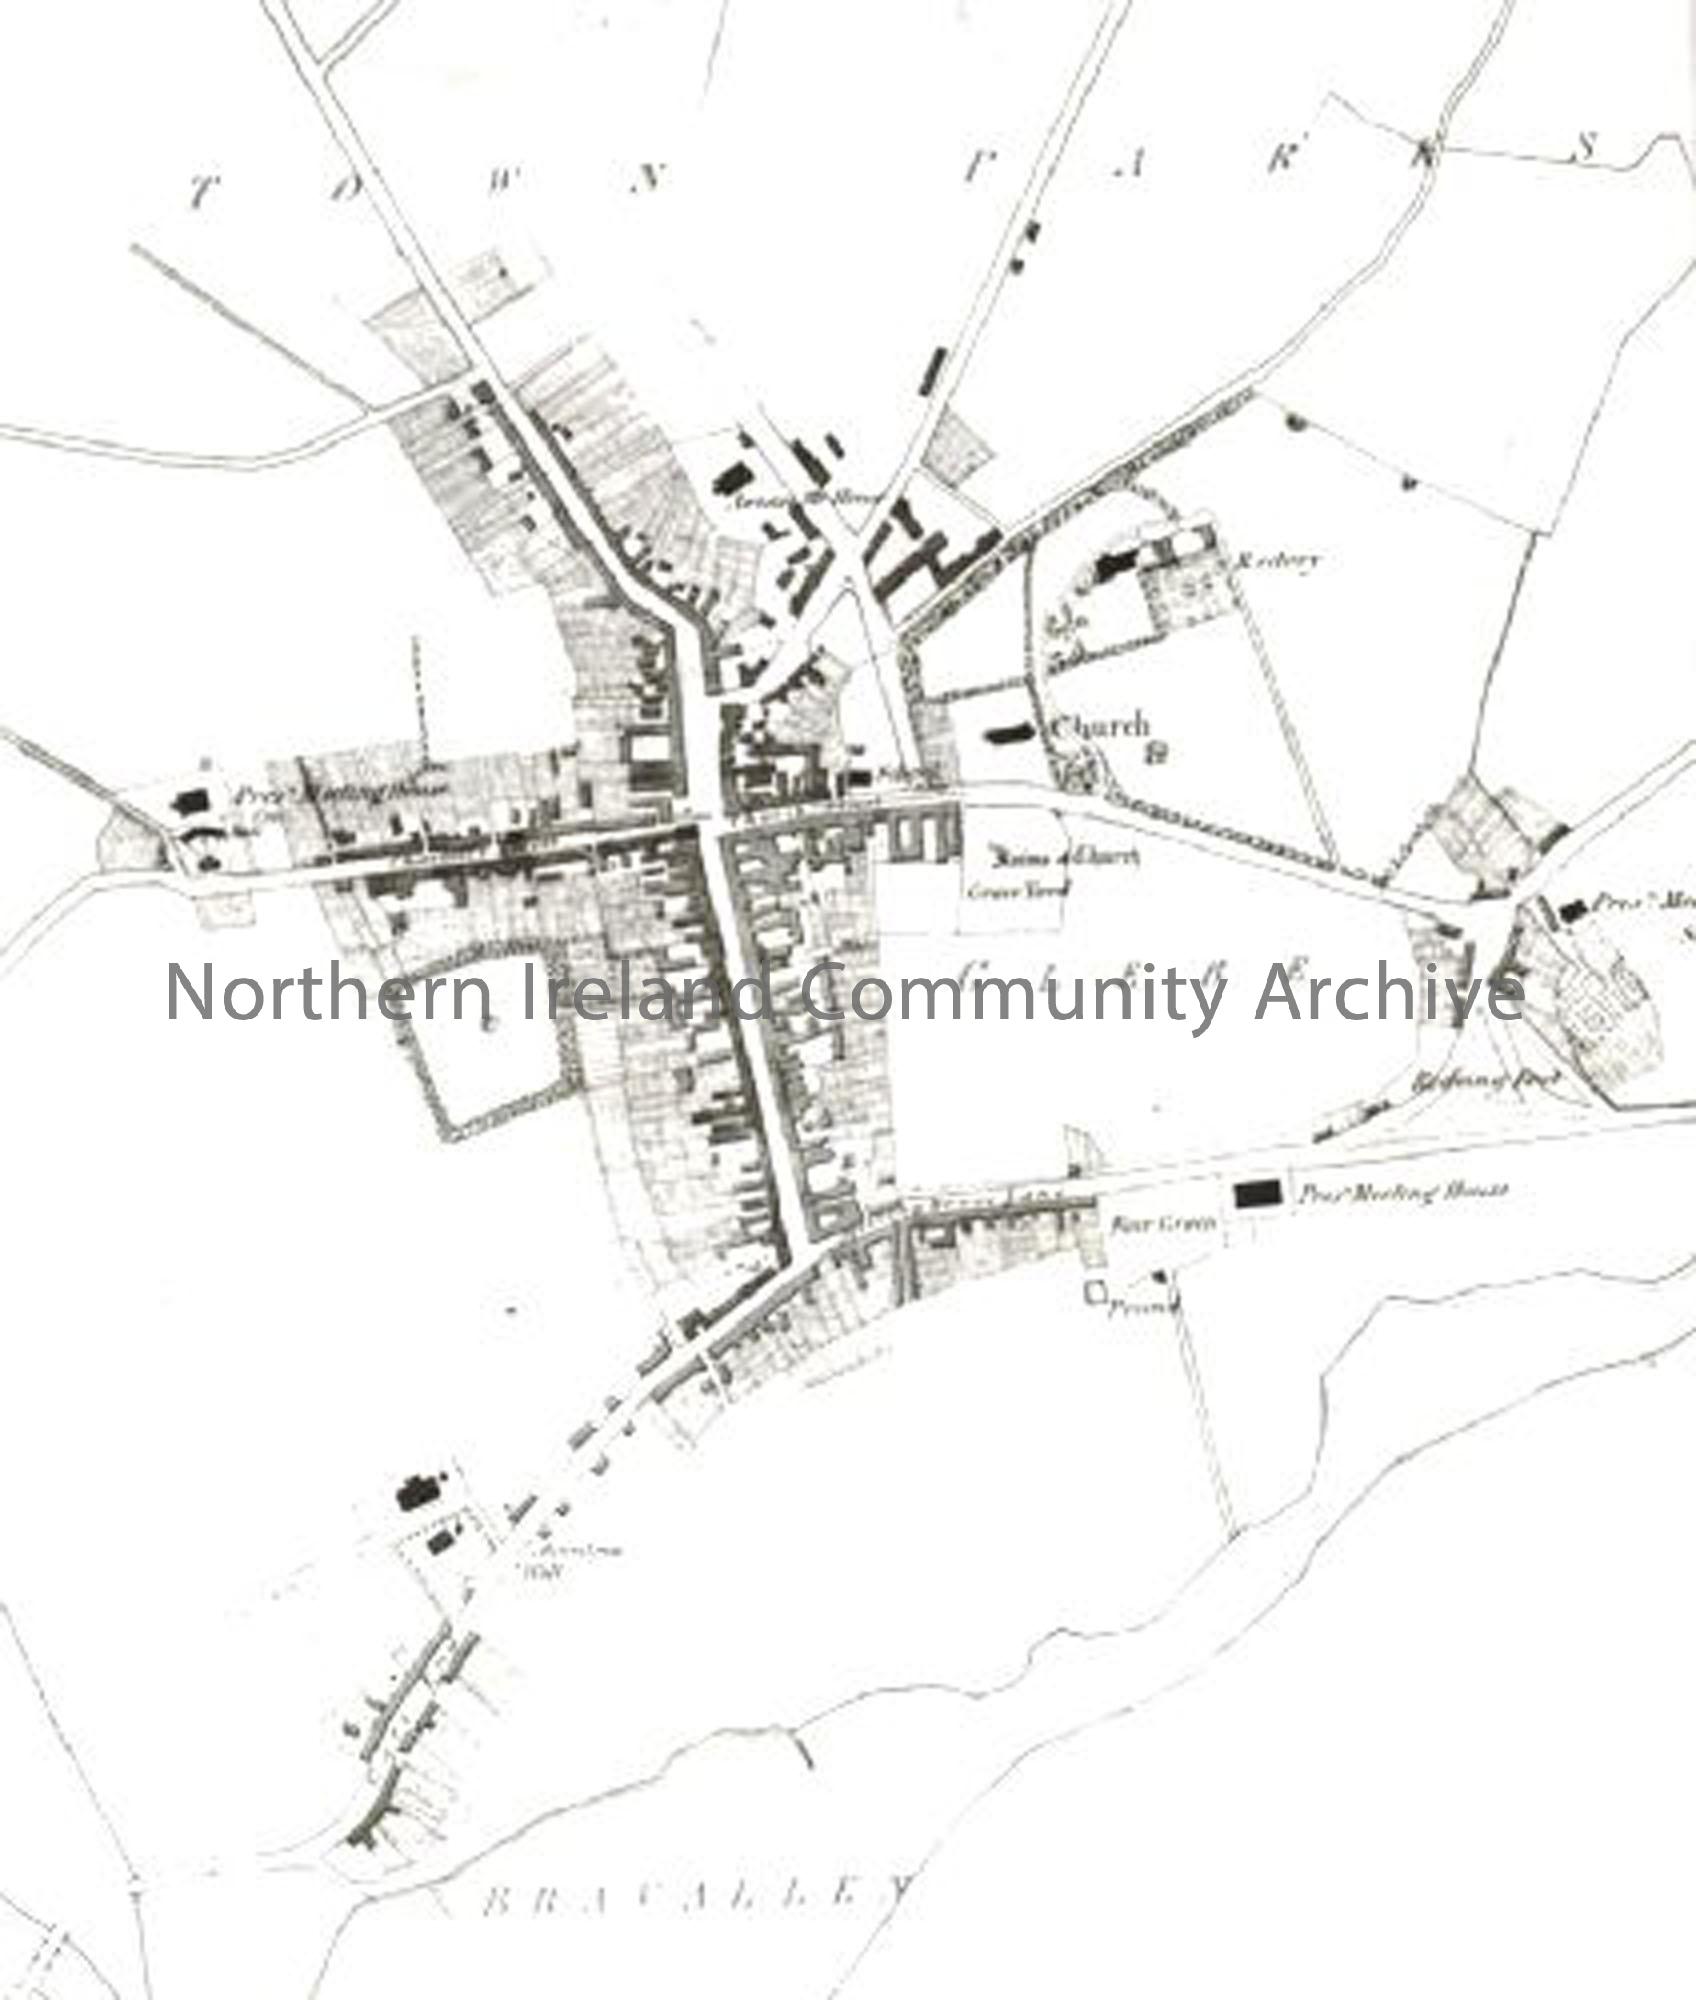 Ordnance Survey map of Ballymoney Town, 1833 (2702)